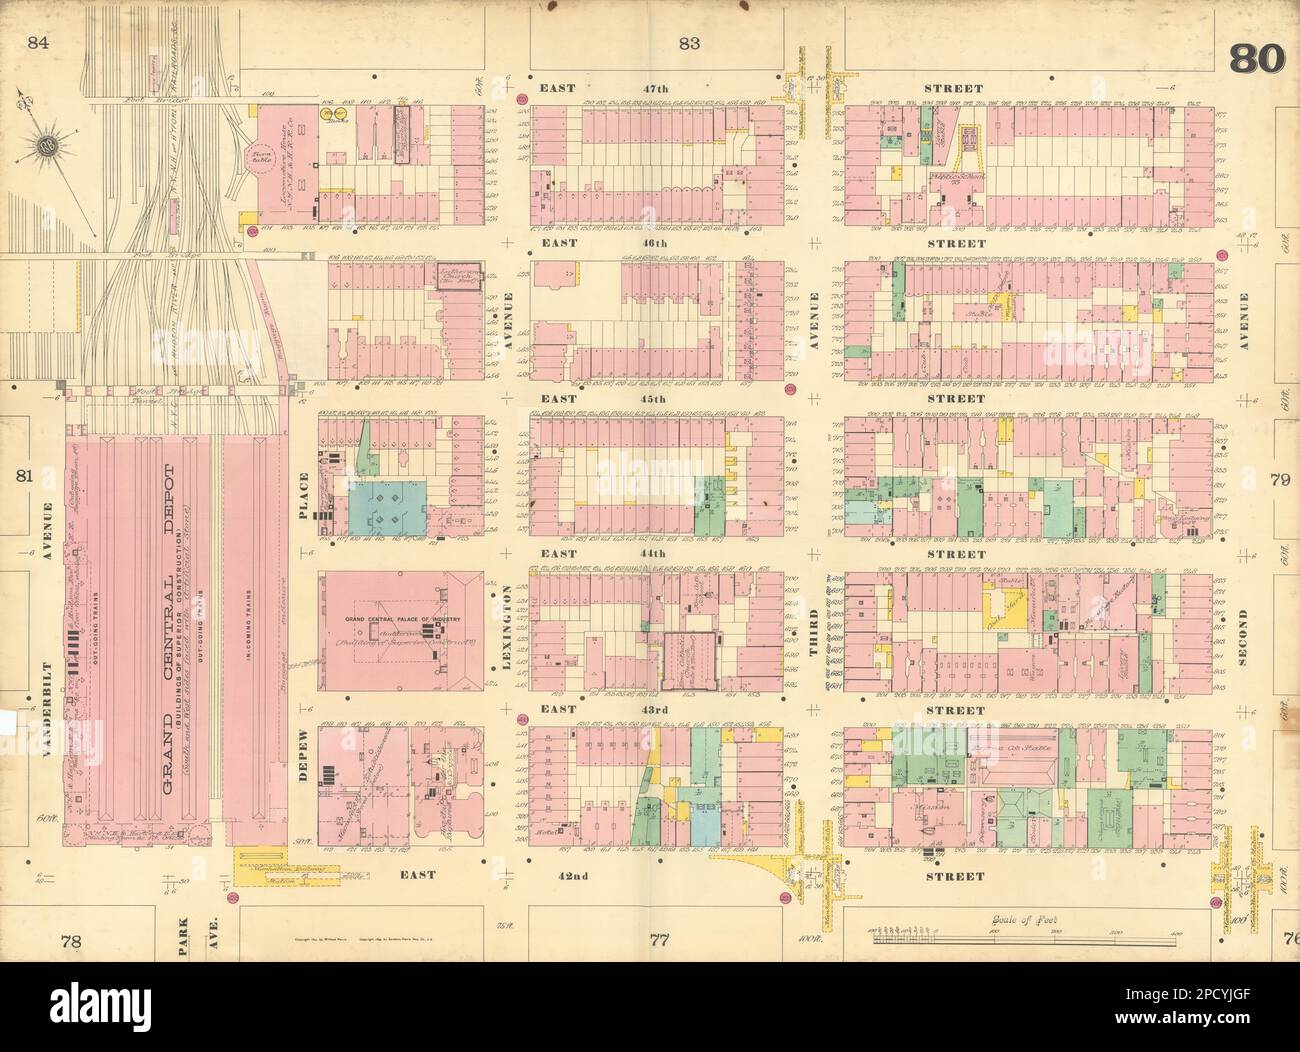 Sanborn NYC #80 Manhattan Midtown East Turtle Bay Grand Central 1899 mapa antiguo Foto de stock